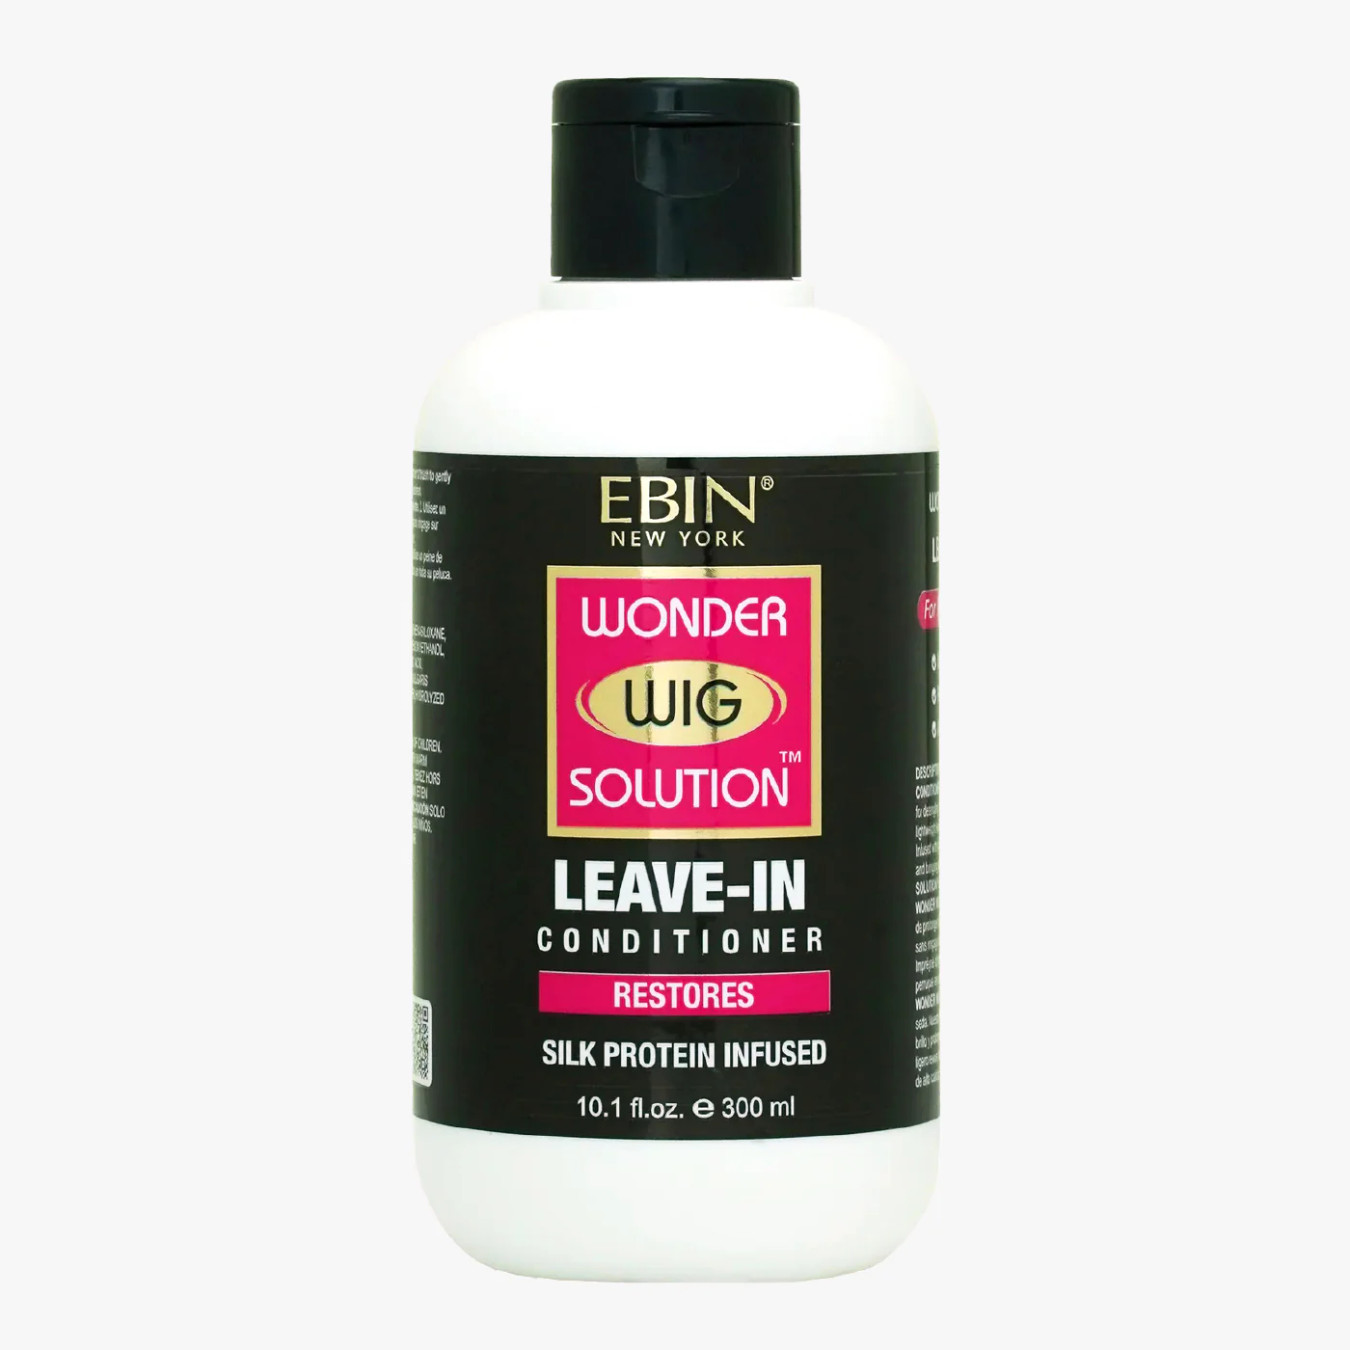 Ebin New York Wonder Wig Solution Leave-In Conditioner Cream (10.1 oz)